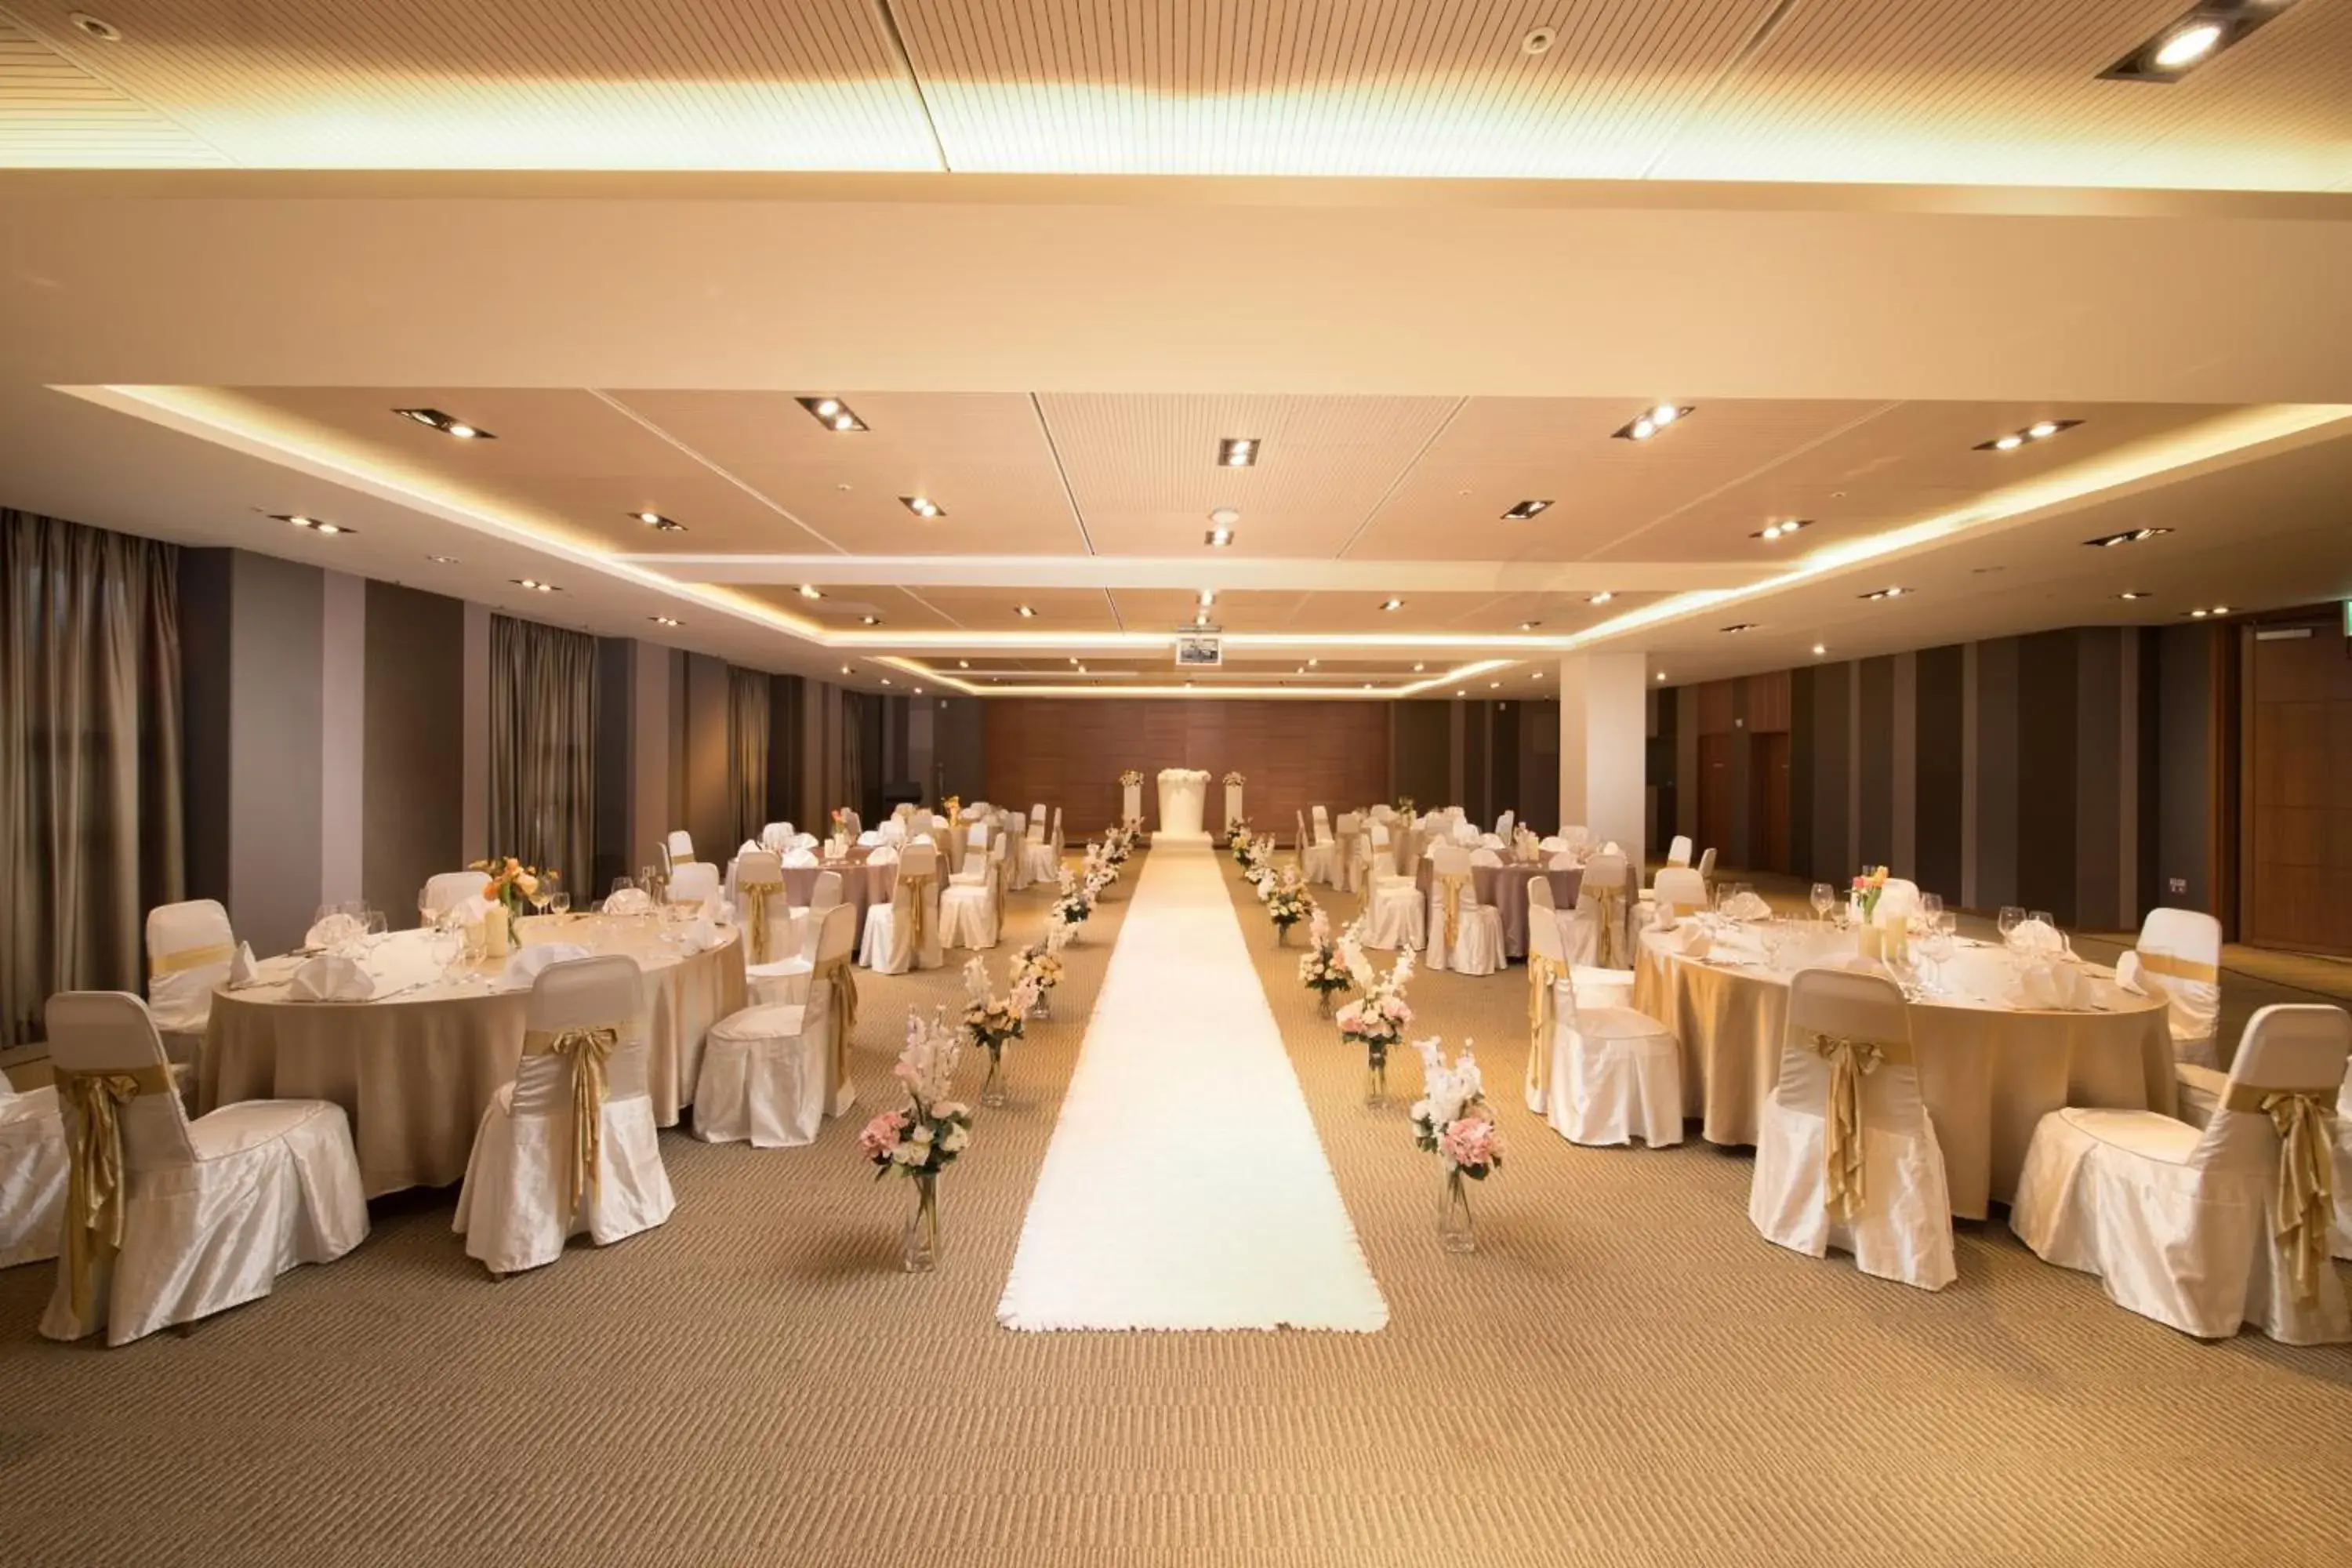 Banquet/Function facilities, Banquet Facilities in We Hotel Jeju